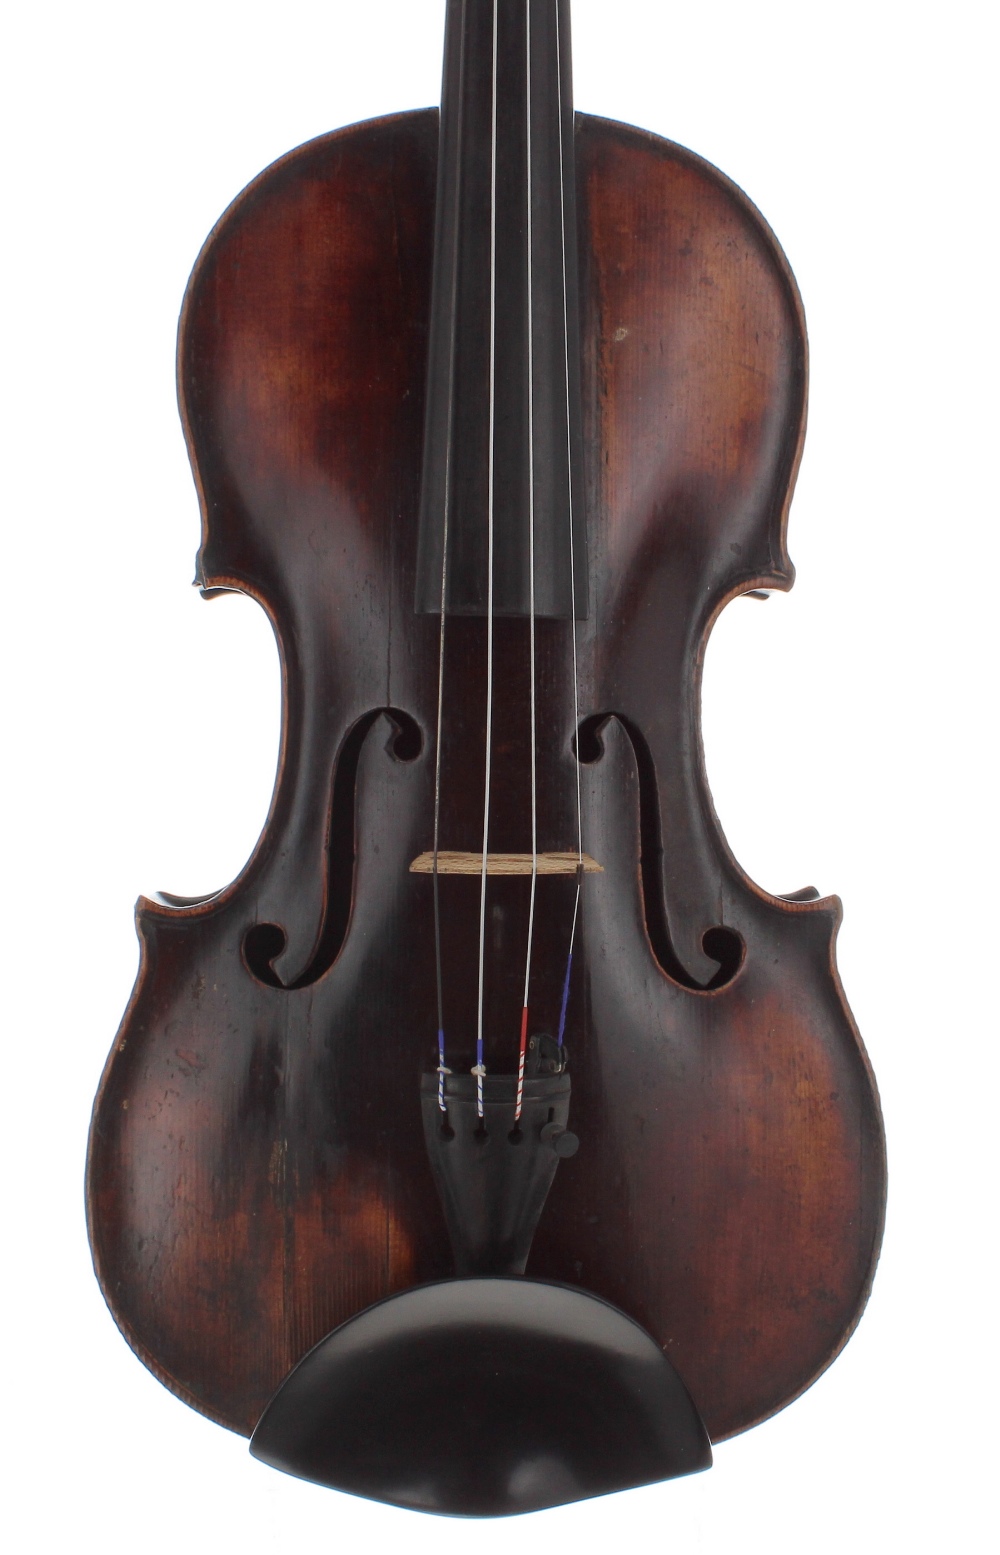 Tyrolean violin circa 1870, 14", 35.60cm